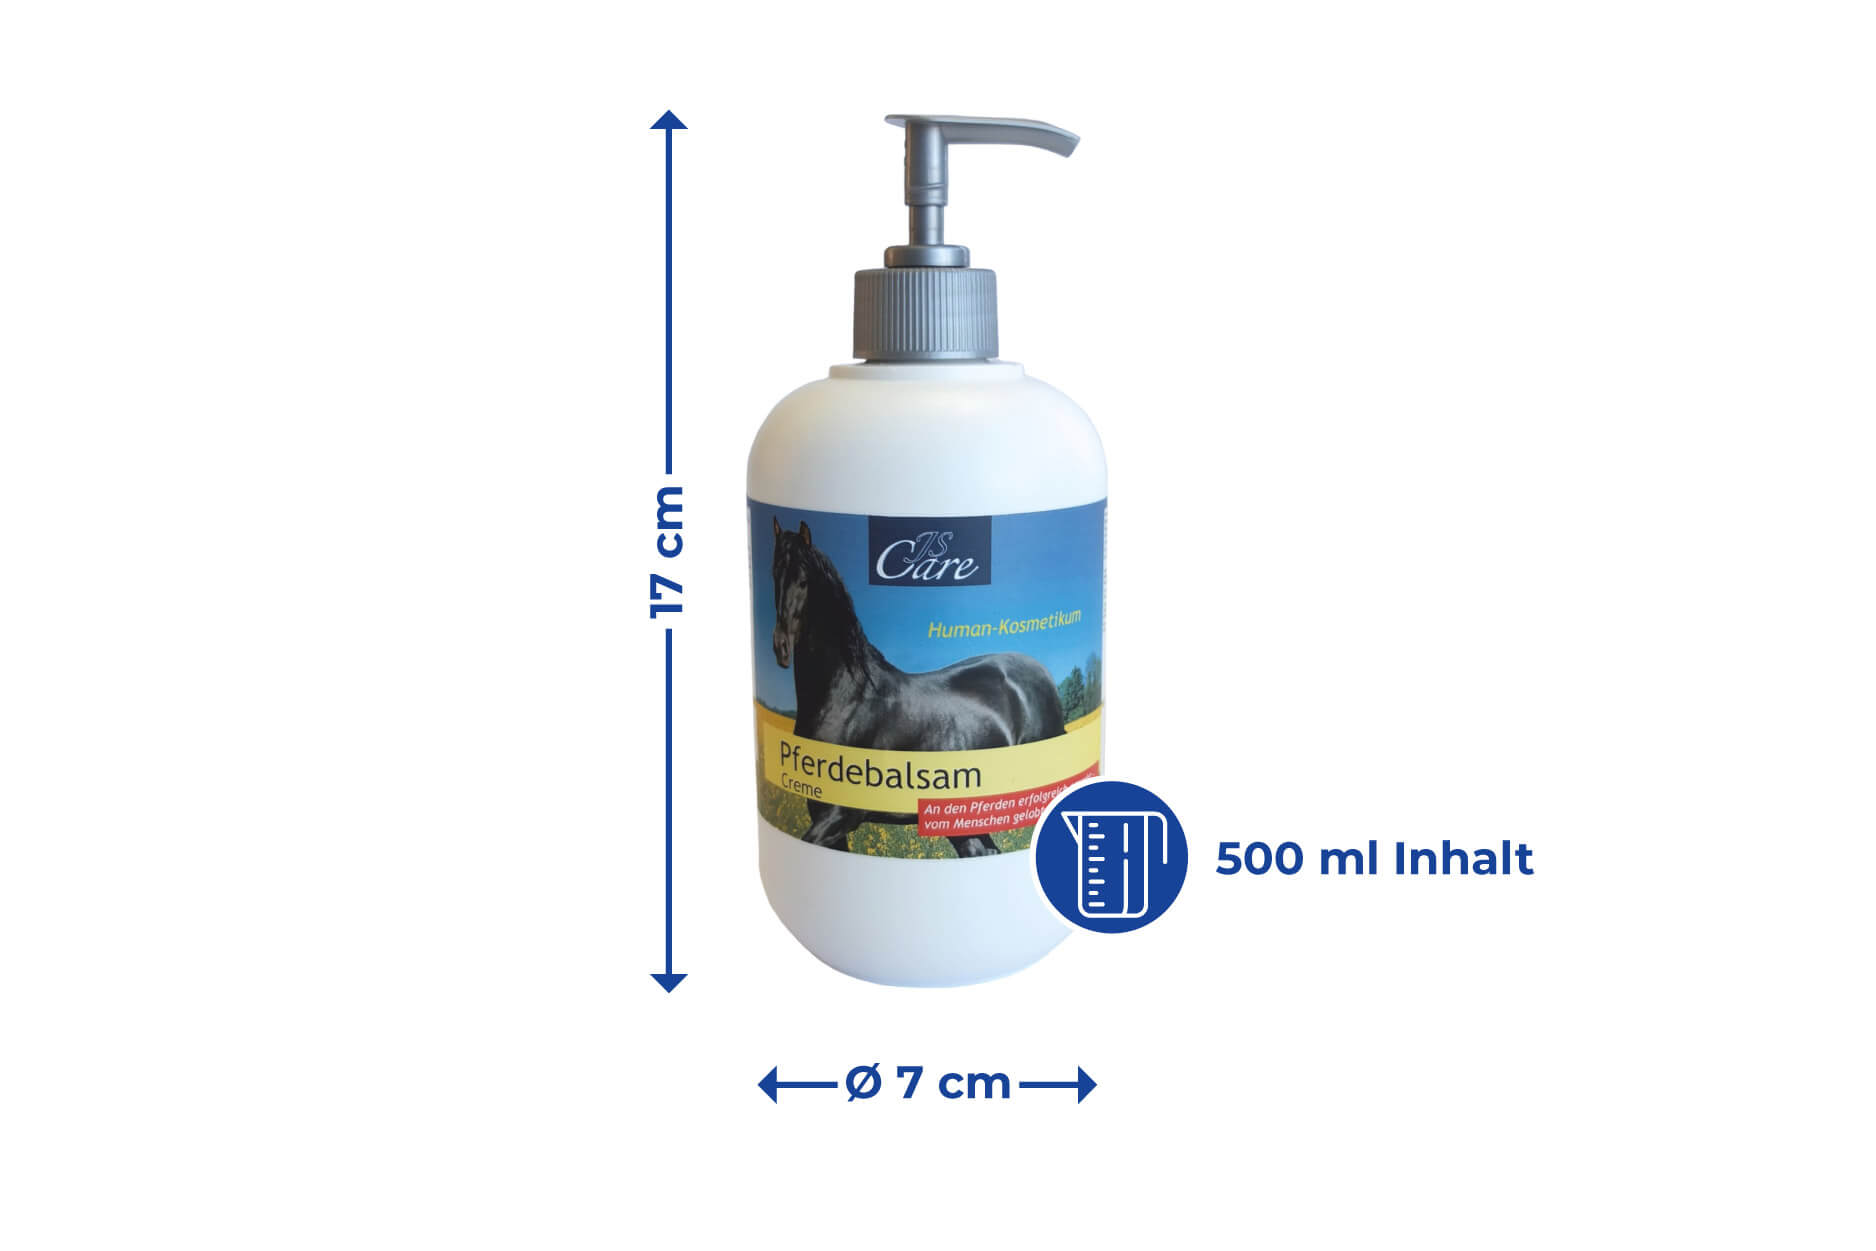 JS Care Pferdebalsam Pumpflasche, 500 ml